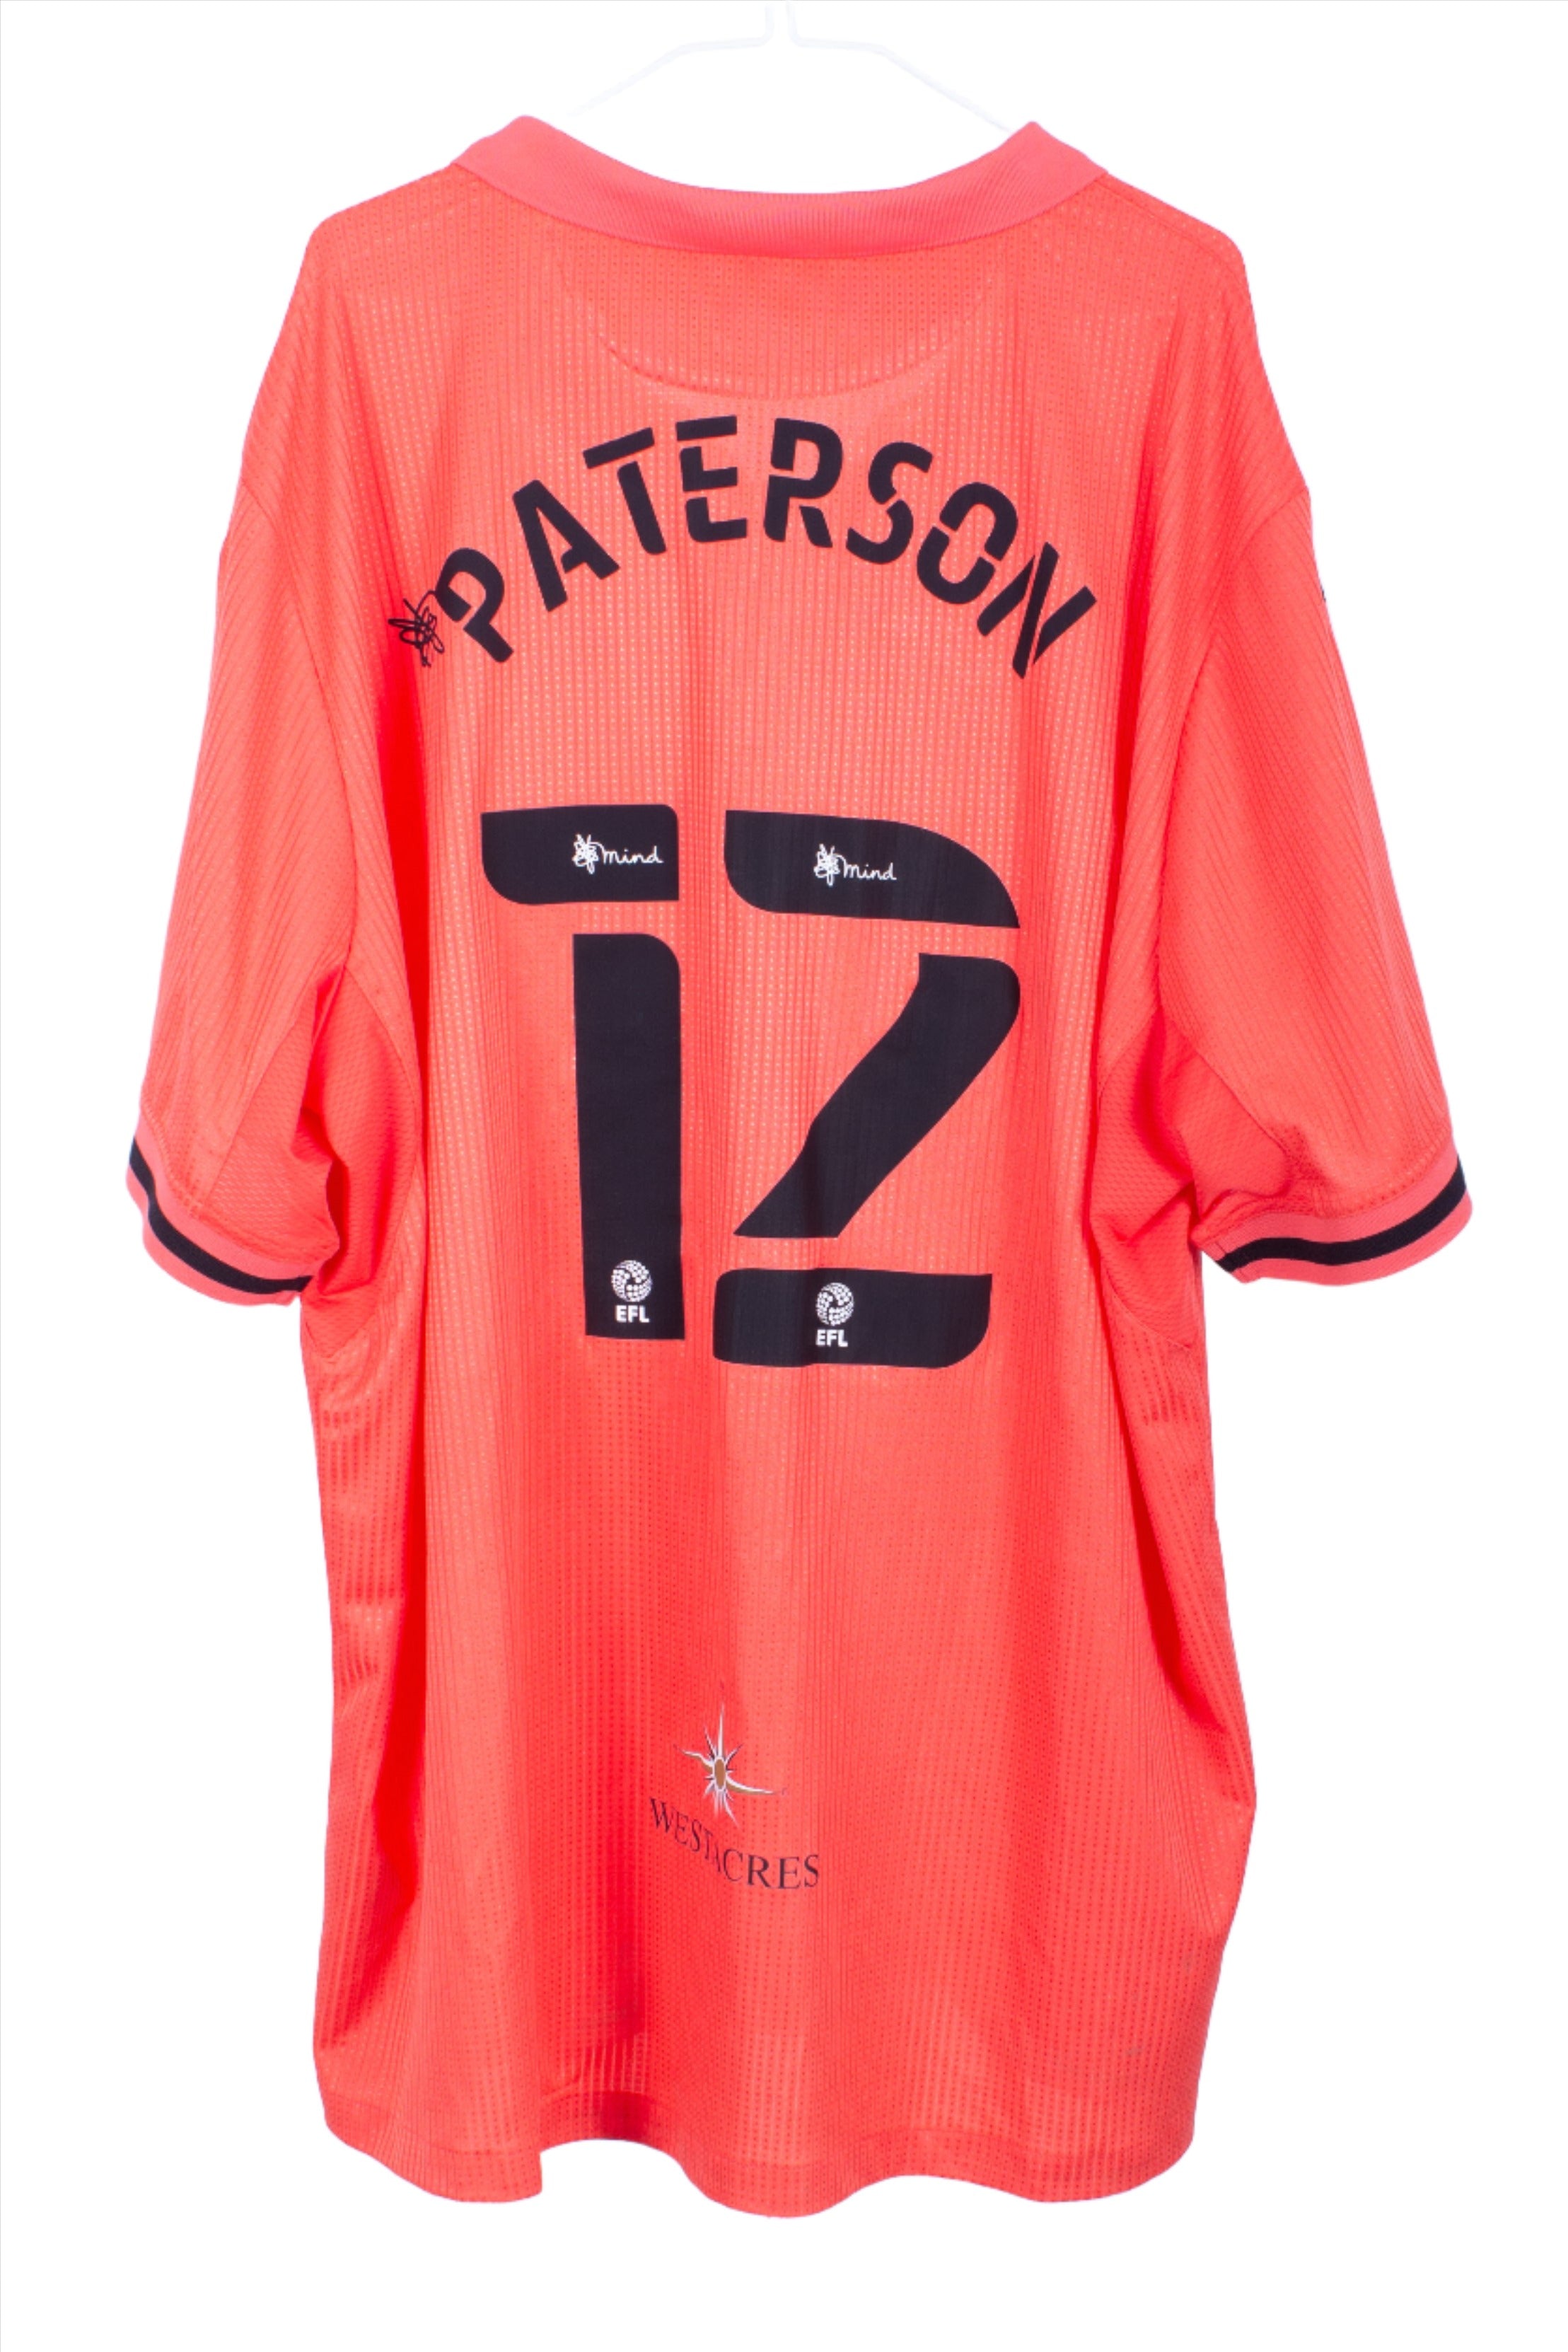 Swansea 2020/21 Away Shirt (Paterson #12)